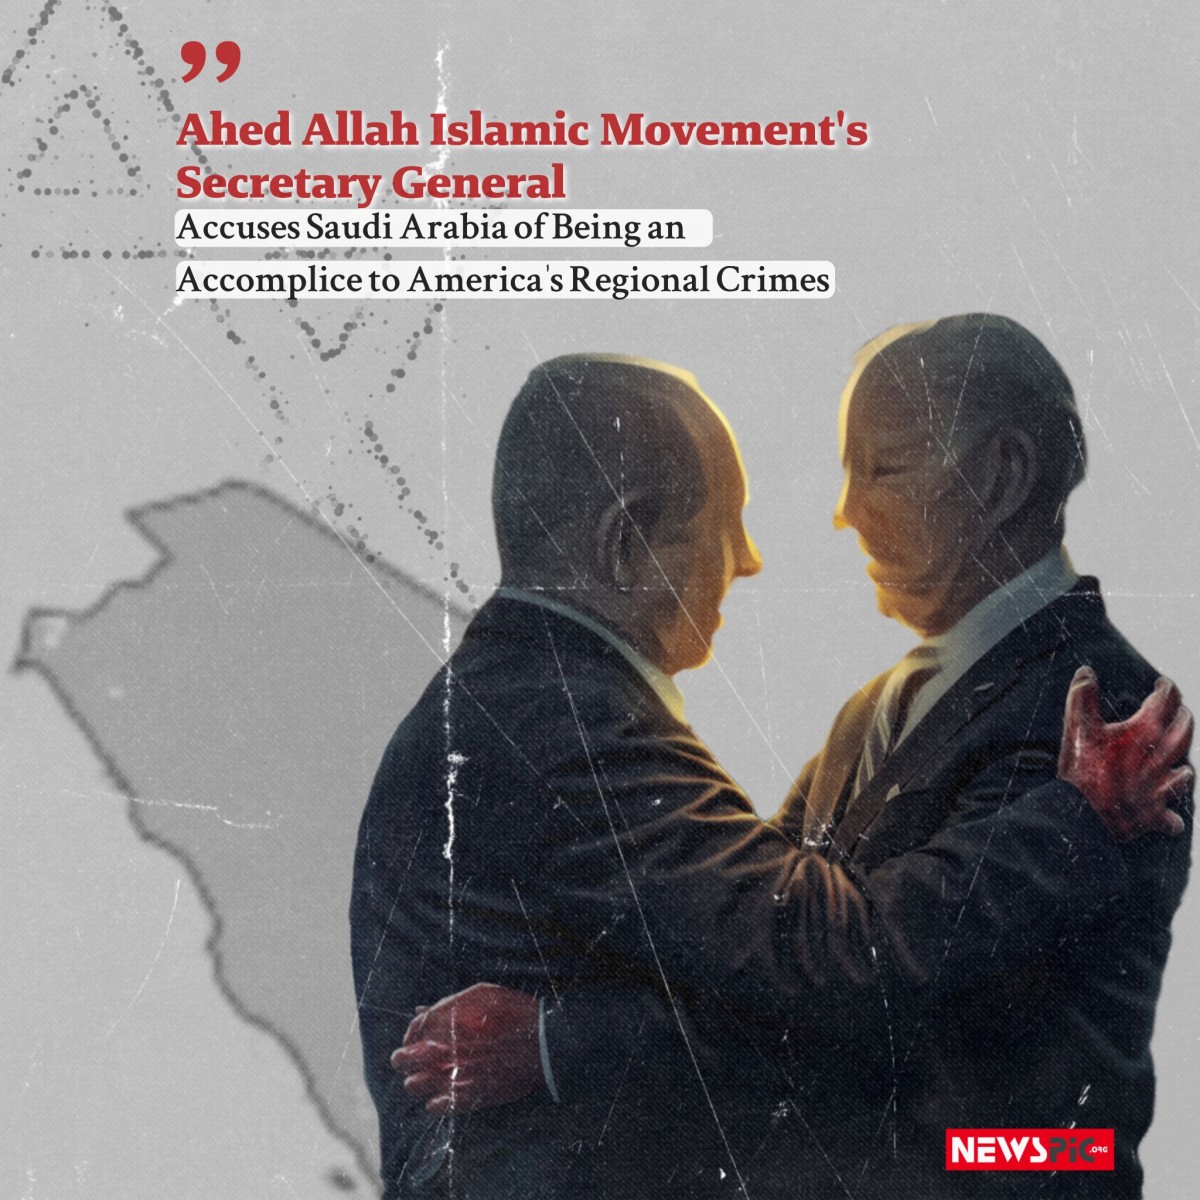 Ahed Allah Islamic Movement's Secretary General